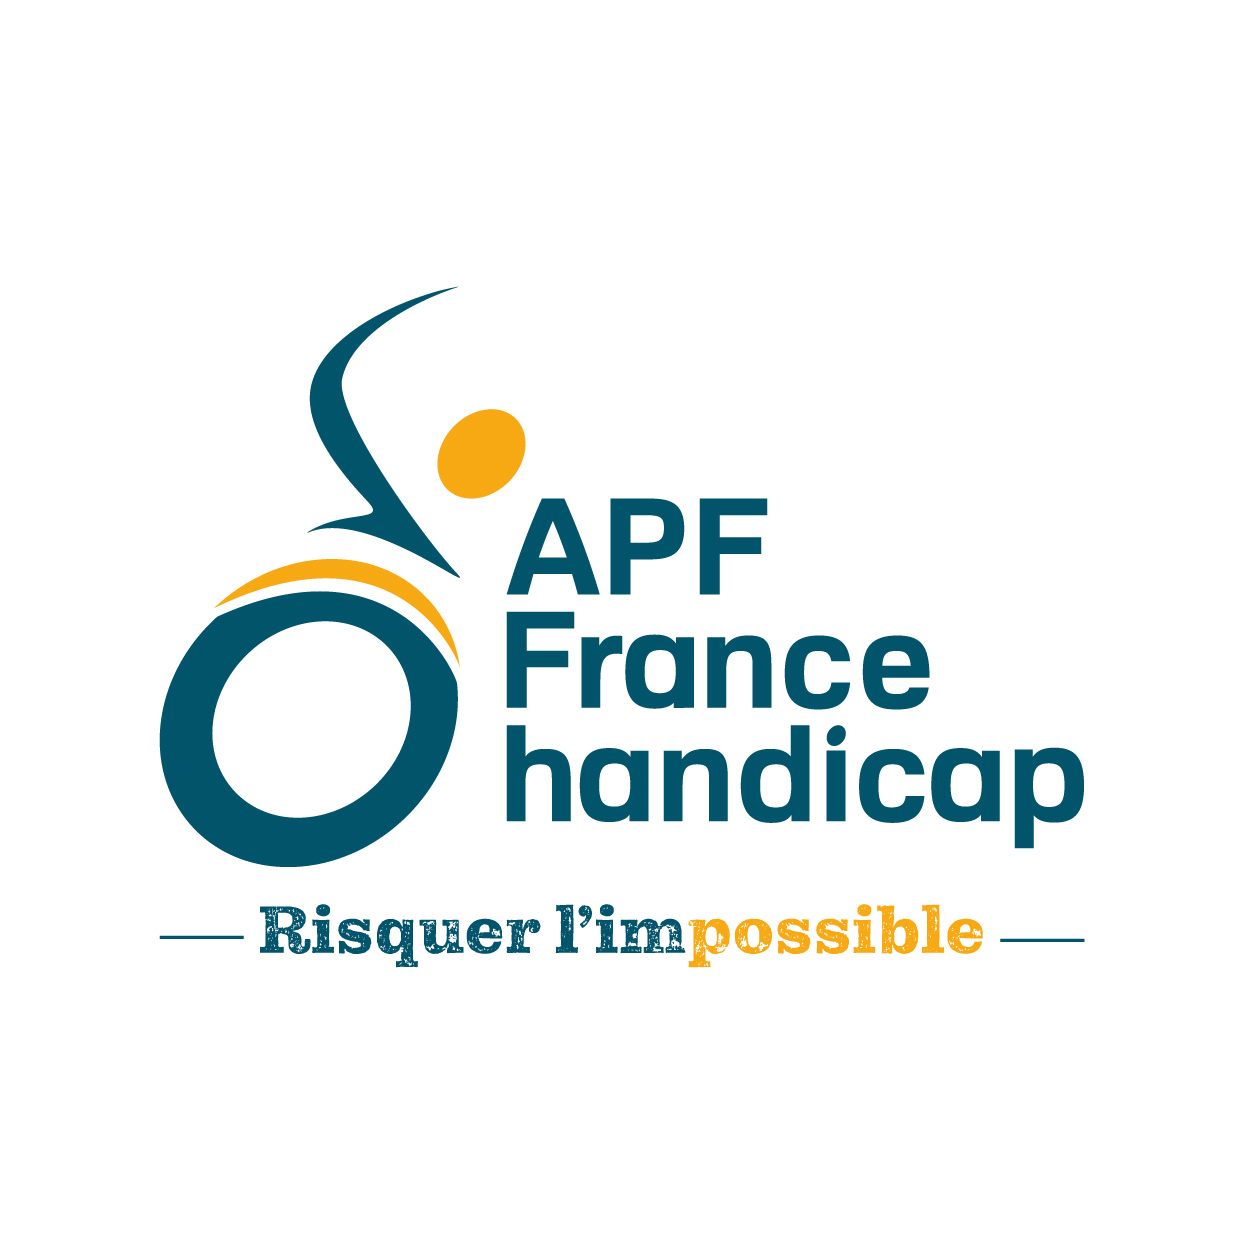 Logo APF France handicap